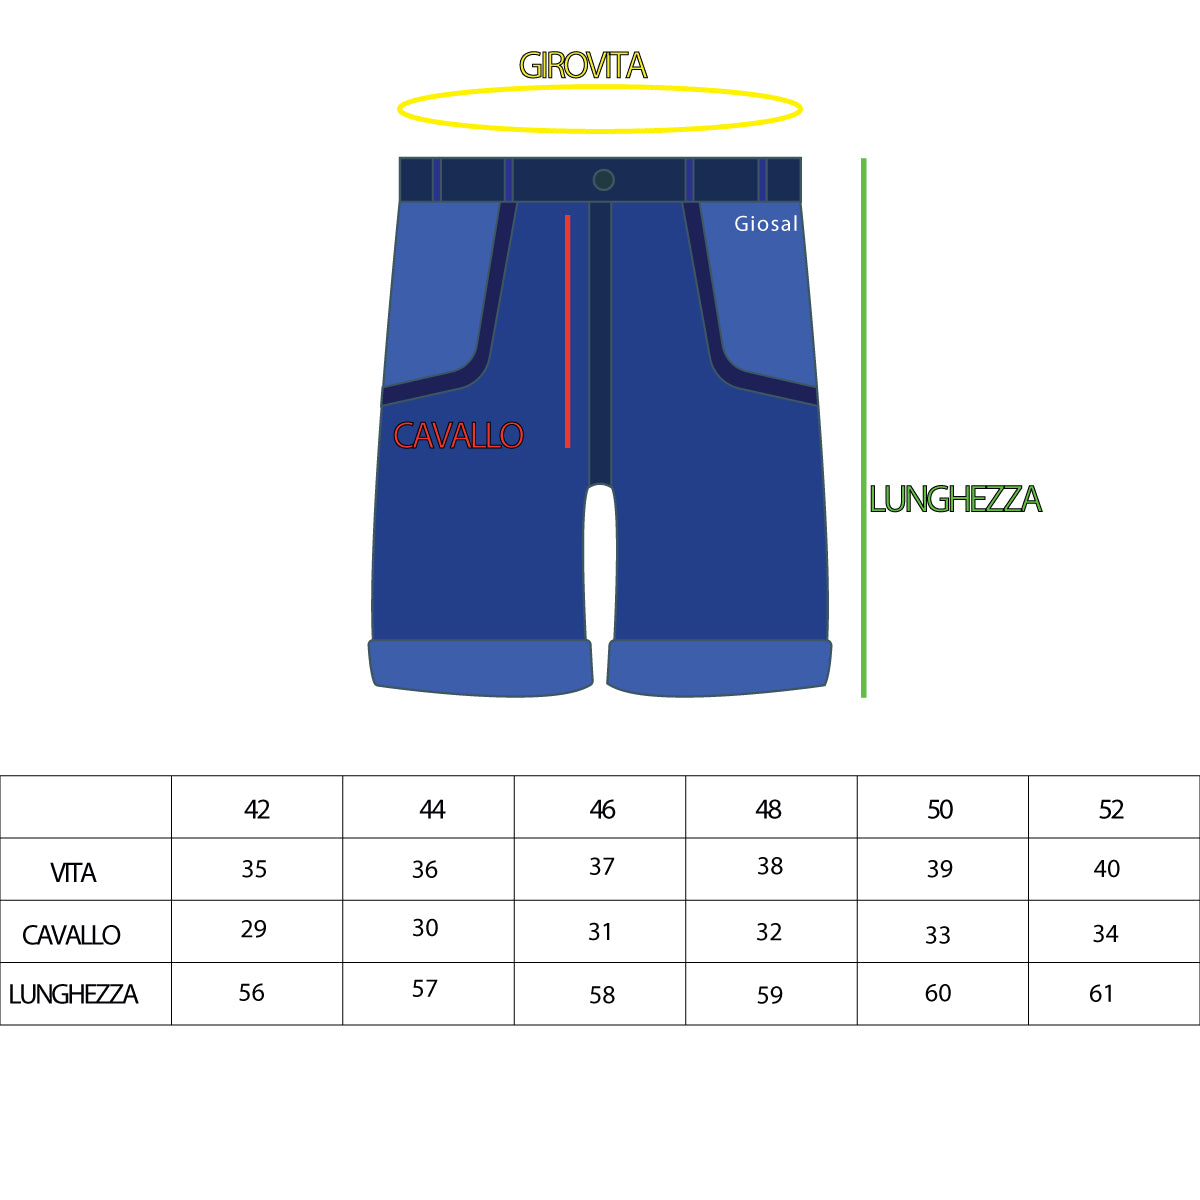 Bermuda Shorts Men Striped America Pocket Gray Slim Low Crotch GIOSAL-PC1579A